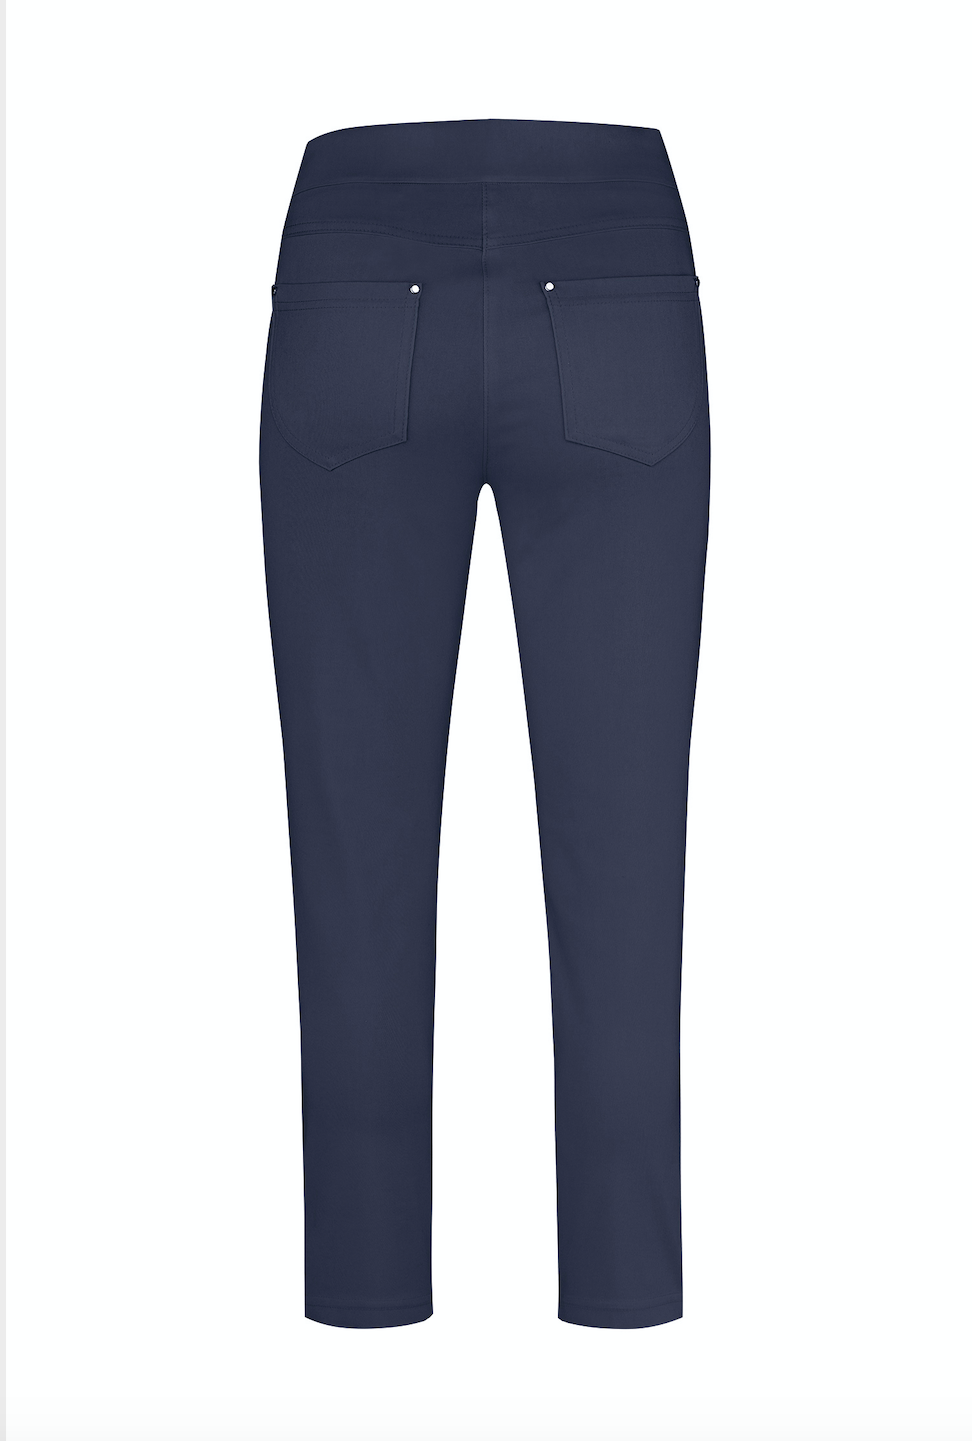 Robell Nena Navy Zip Detail Trousers